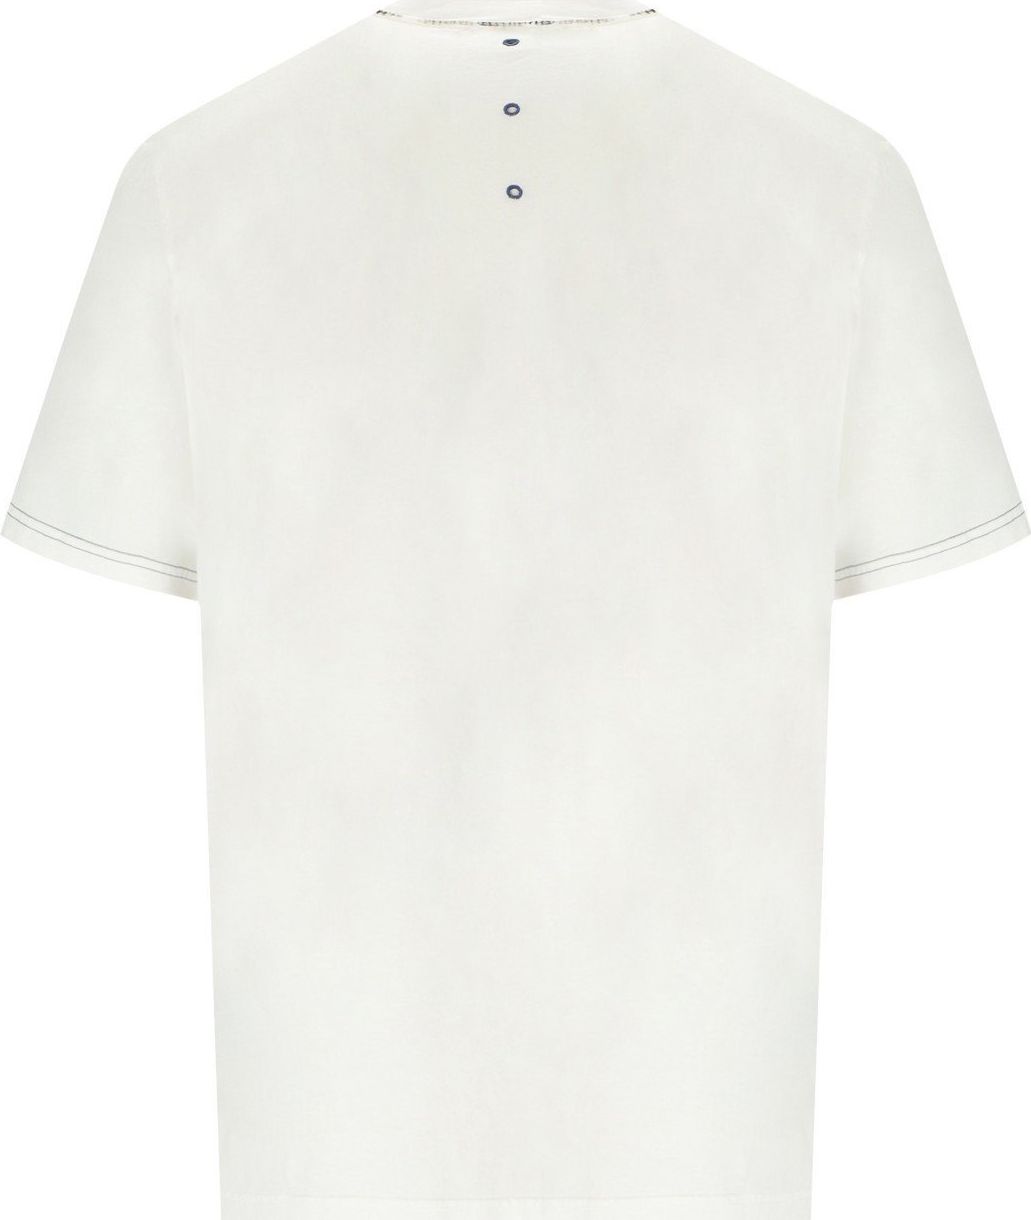 Premiata Athens White T-shirt White Wit